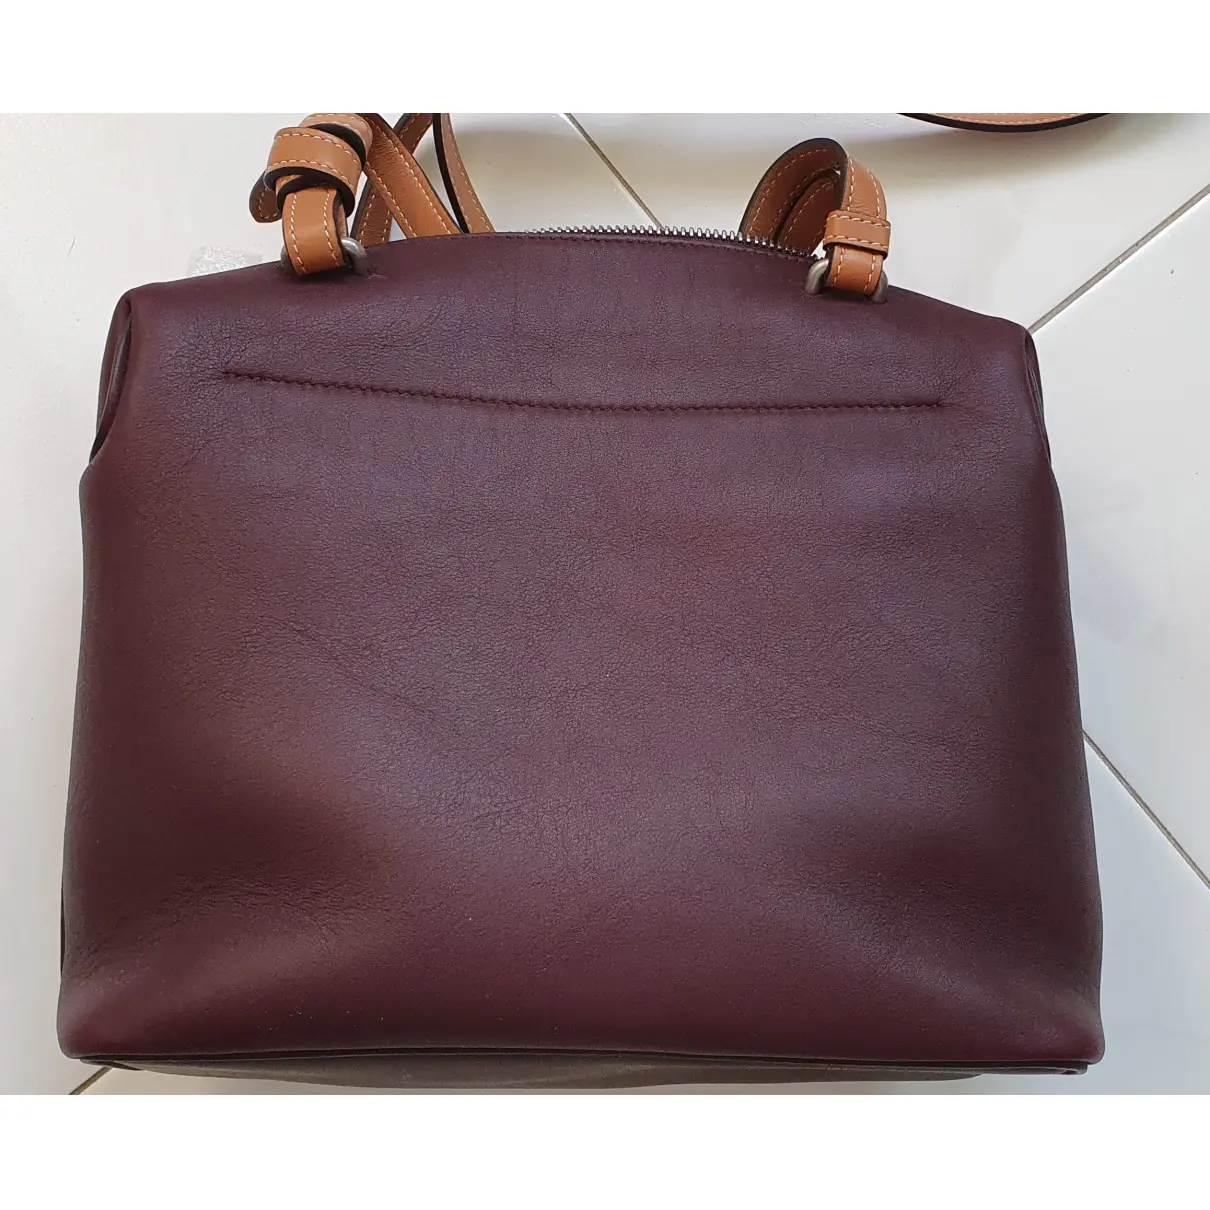 Buy Celine Soft Cube leather crossbody bag online